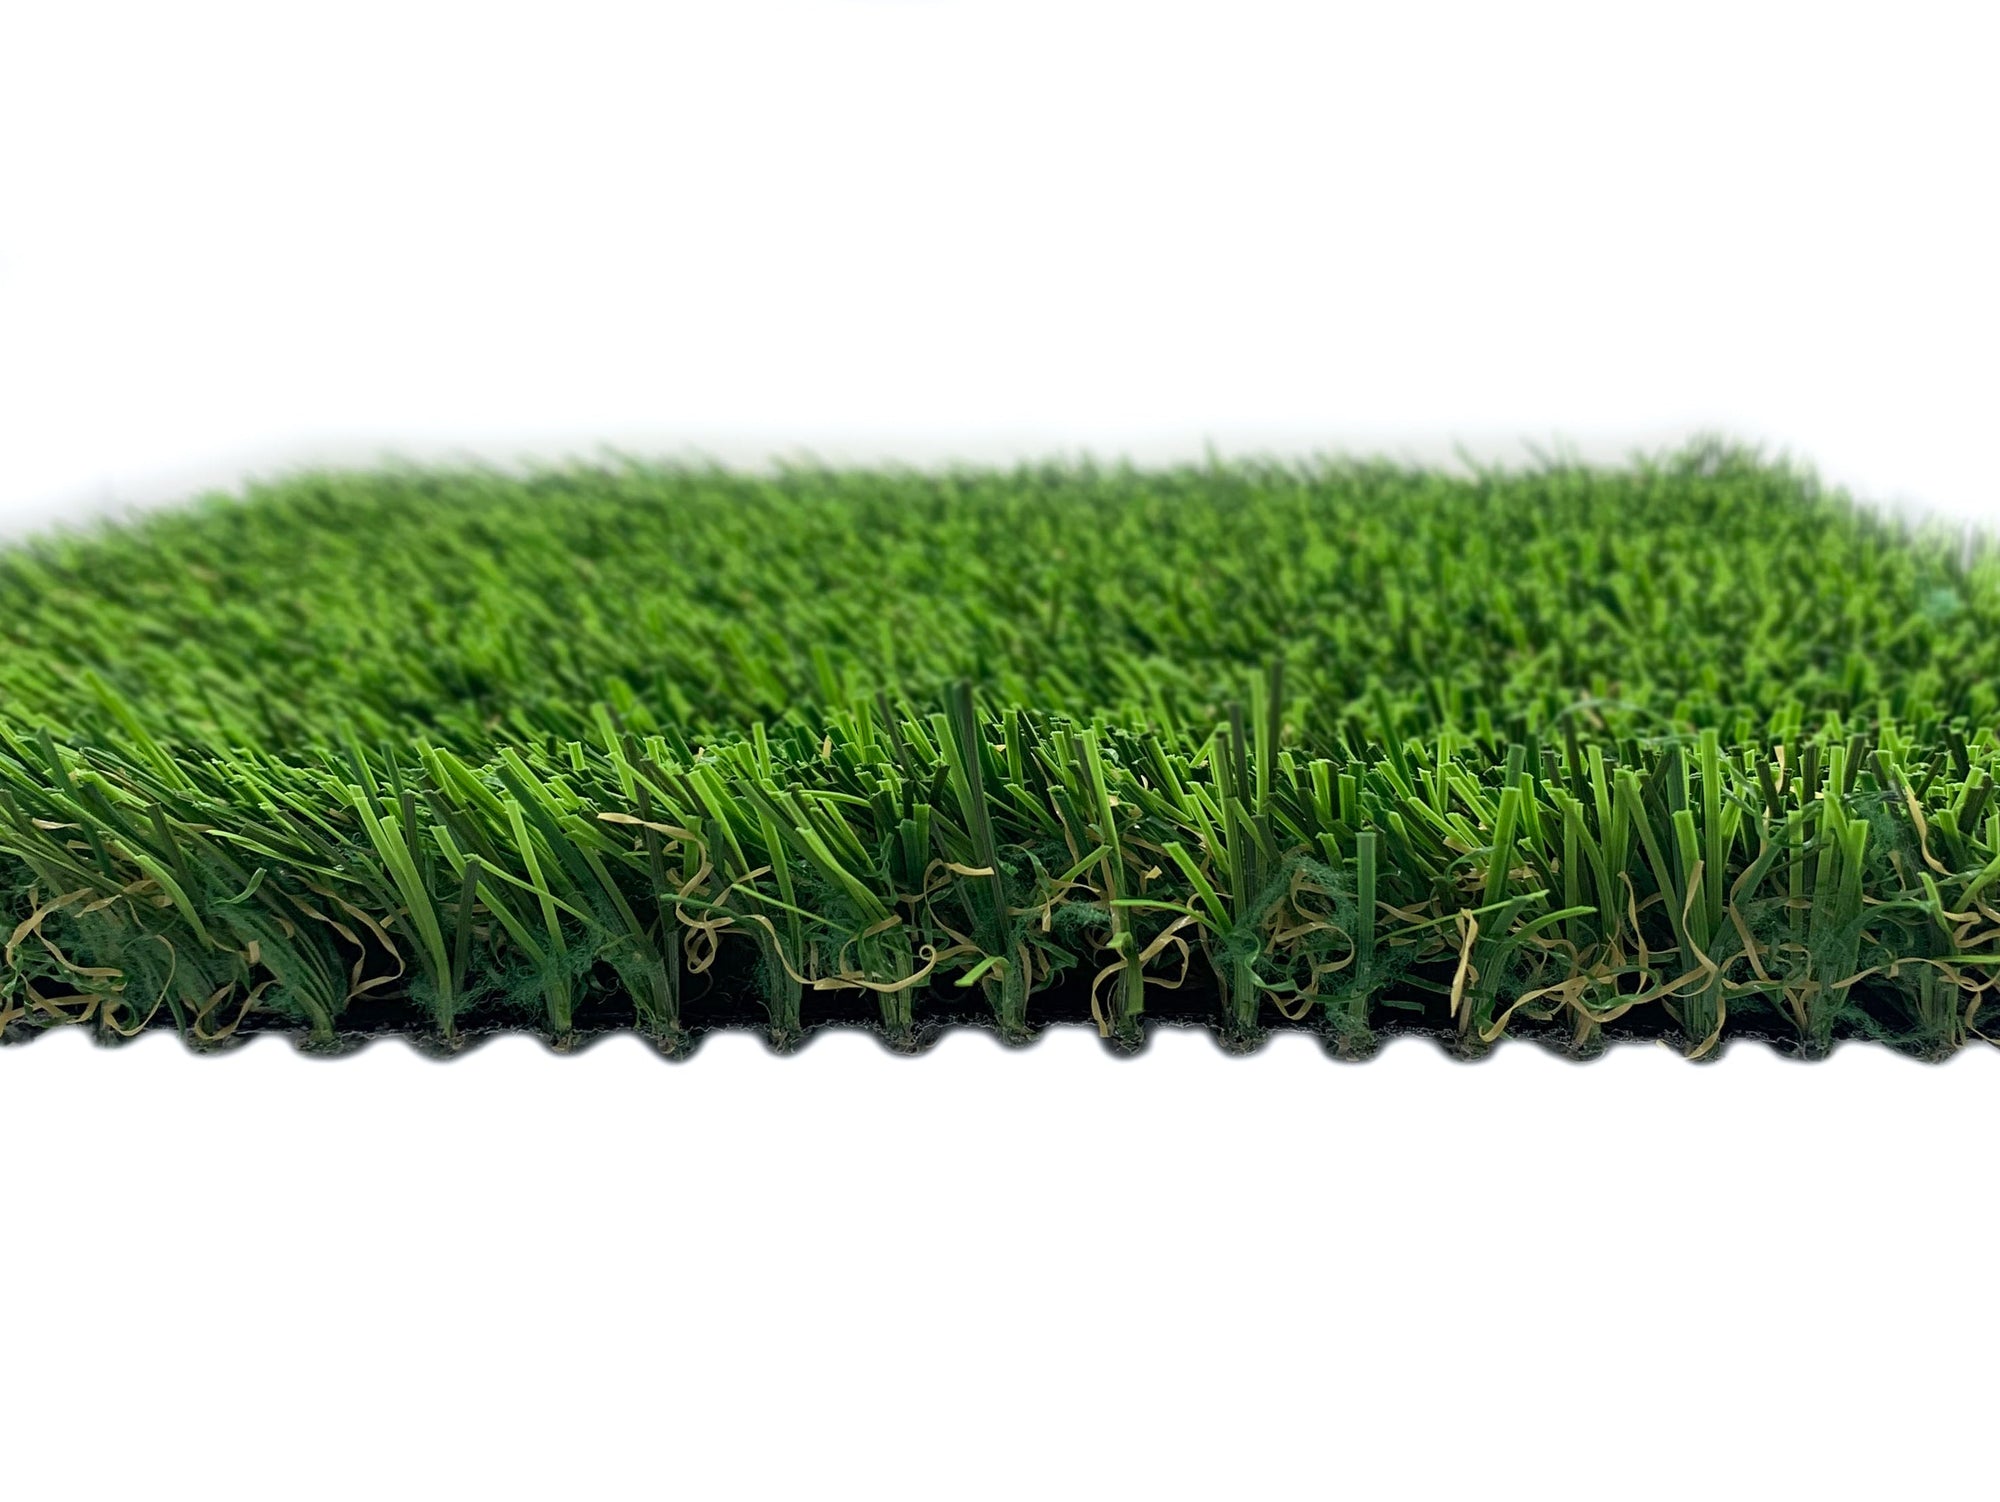 Reserve Serenity-Synthetic Grass Turf-Shawgrass-Shaw-303-Urethane-1.25-KNB Mills